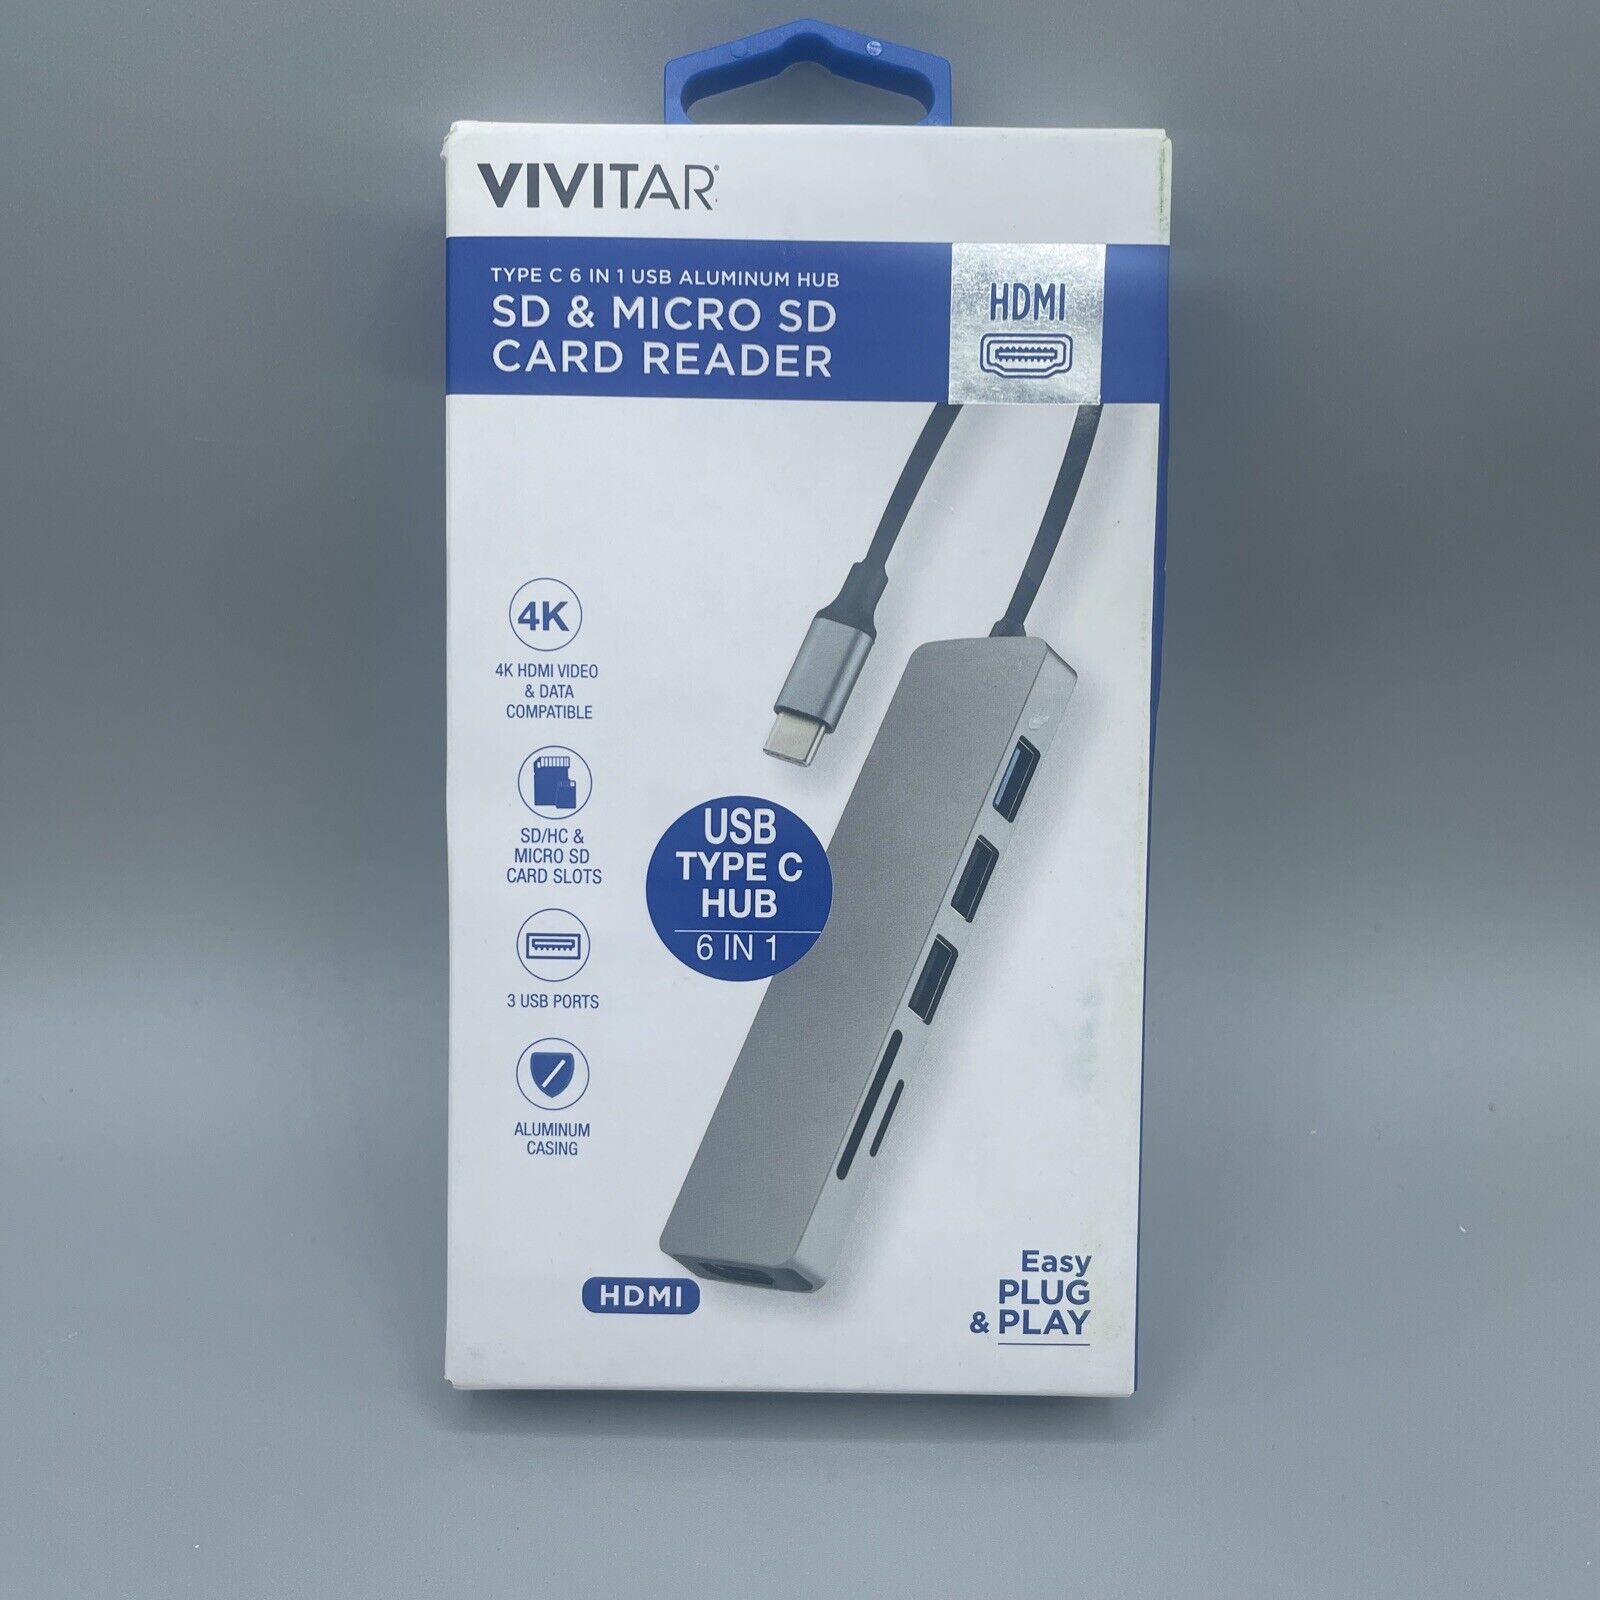 Vivitar Aluminum USB Type C Hub 6 In 1 SD & Micro SD Card Reader Plug & Play NEW